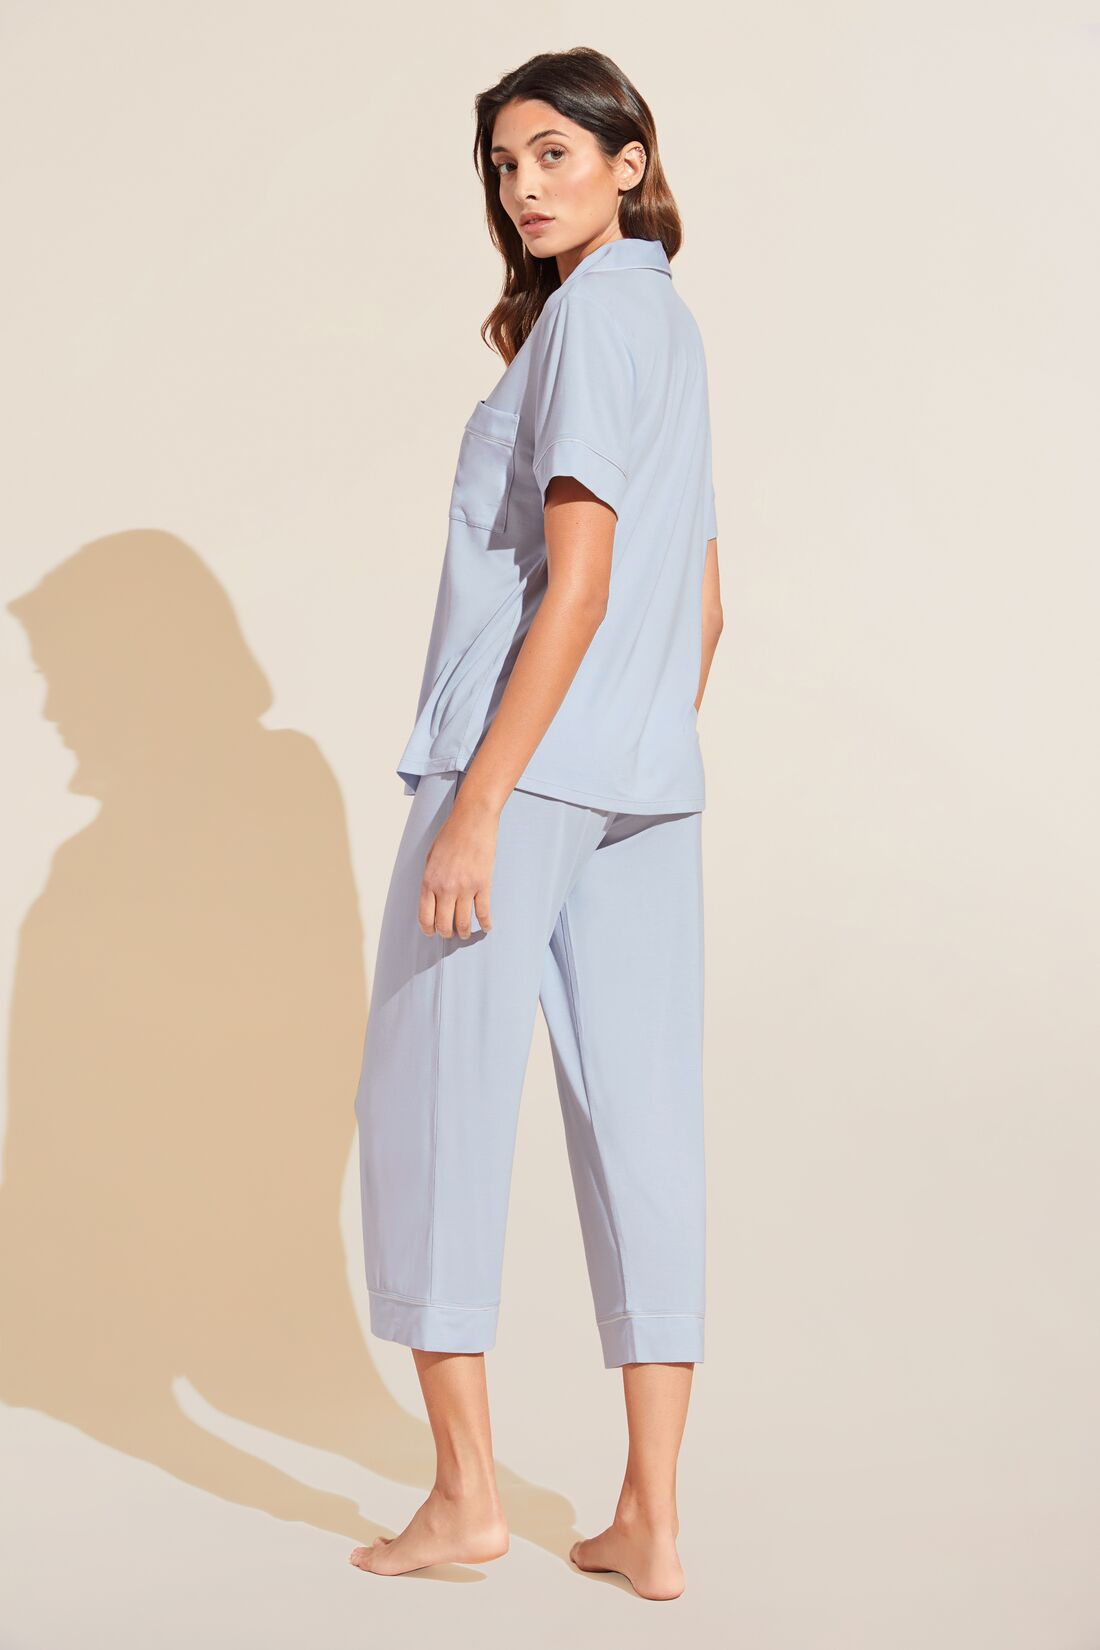 Ebrjy Gisele Tencel Modal Pajamas Set